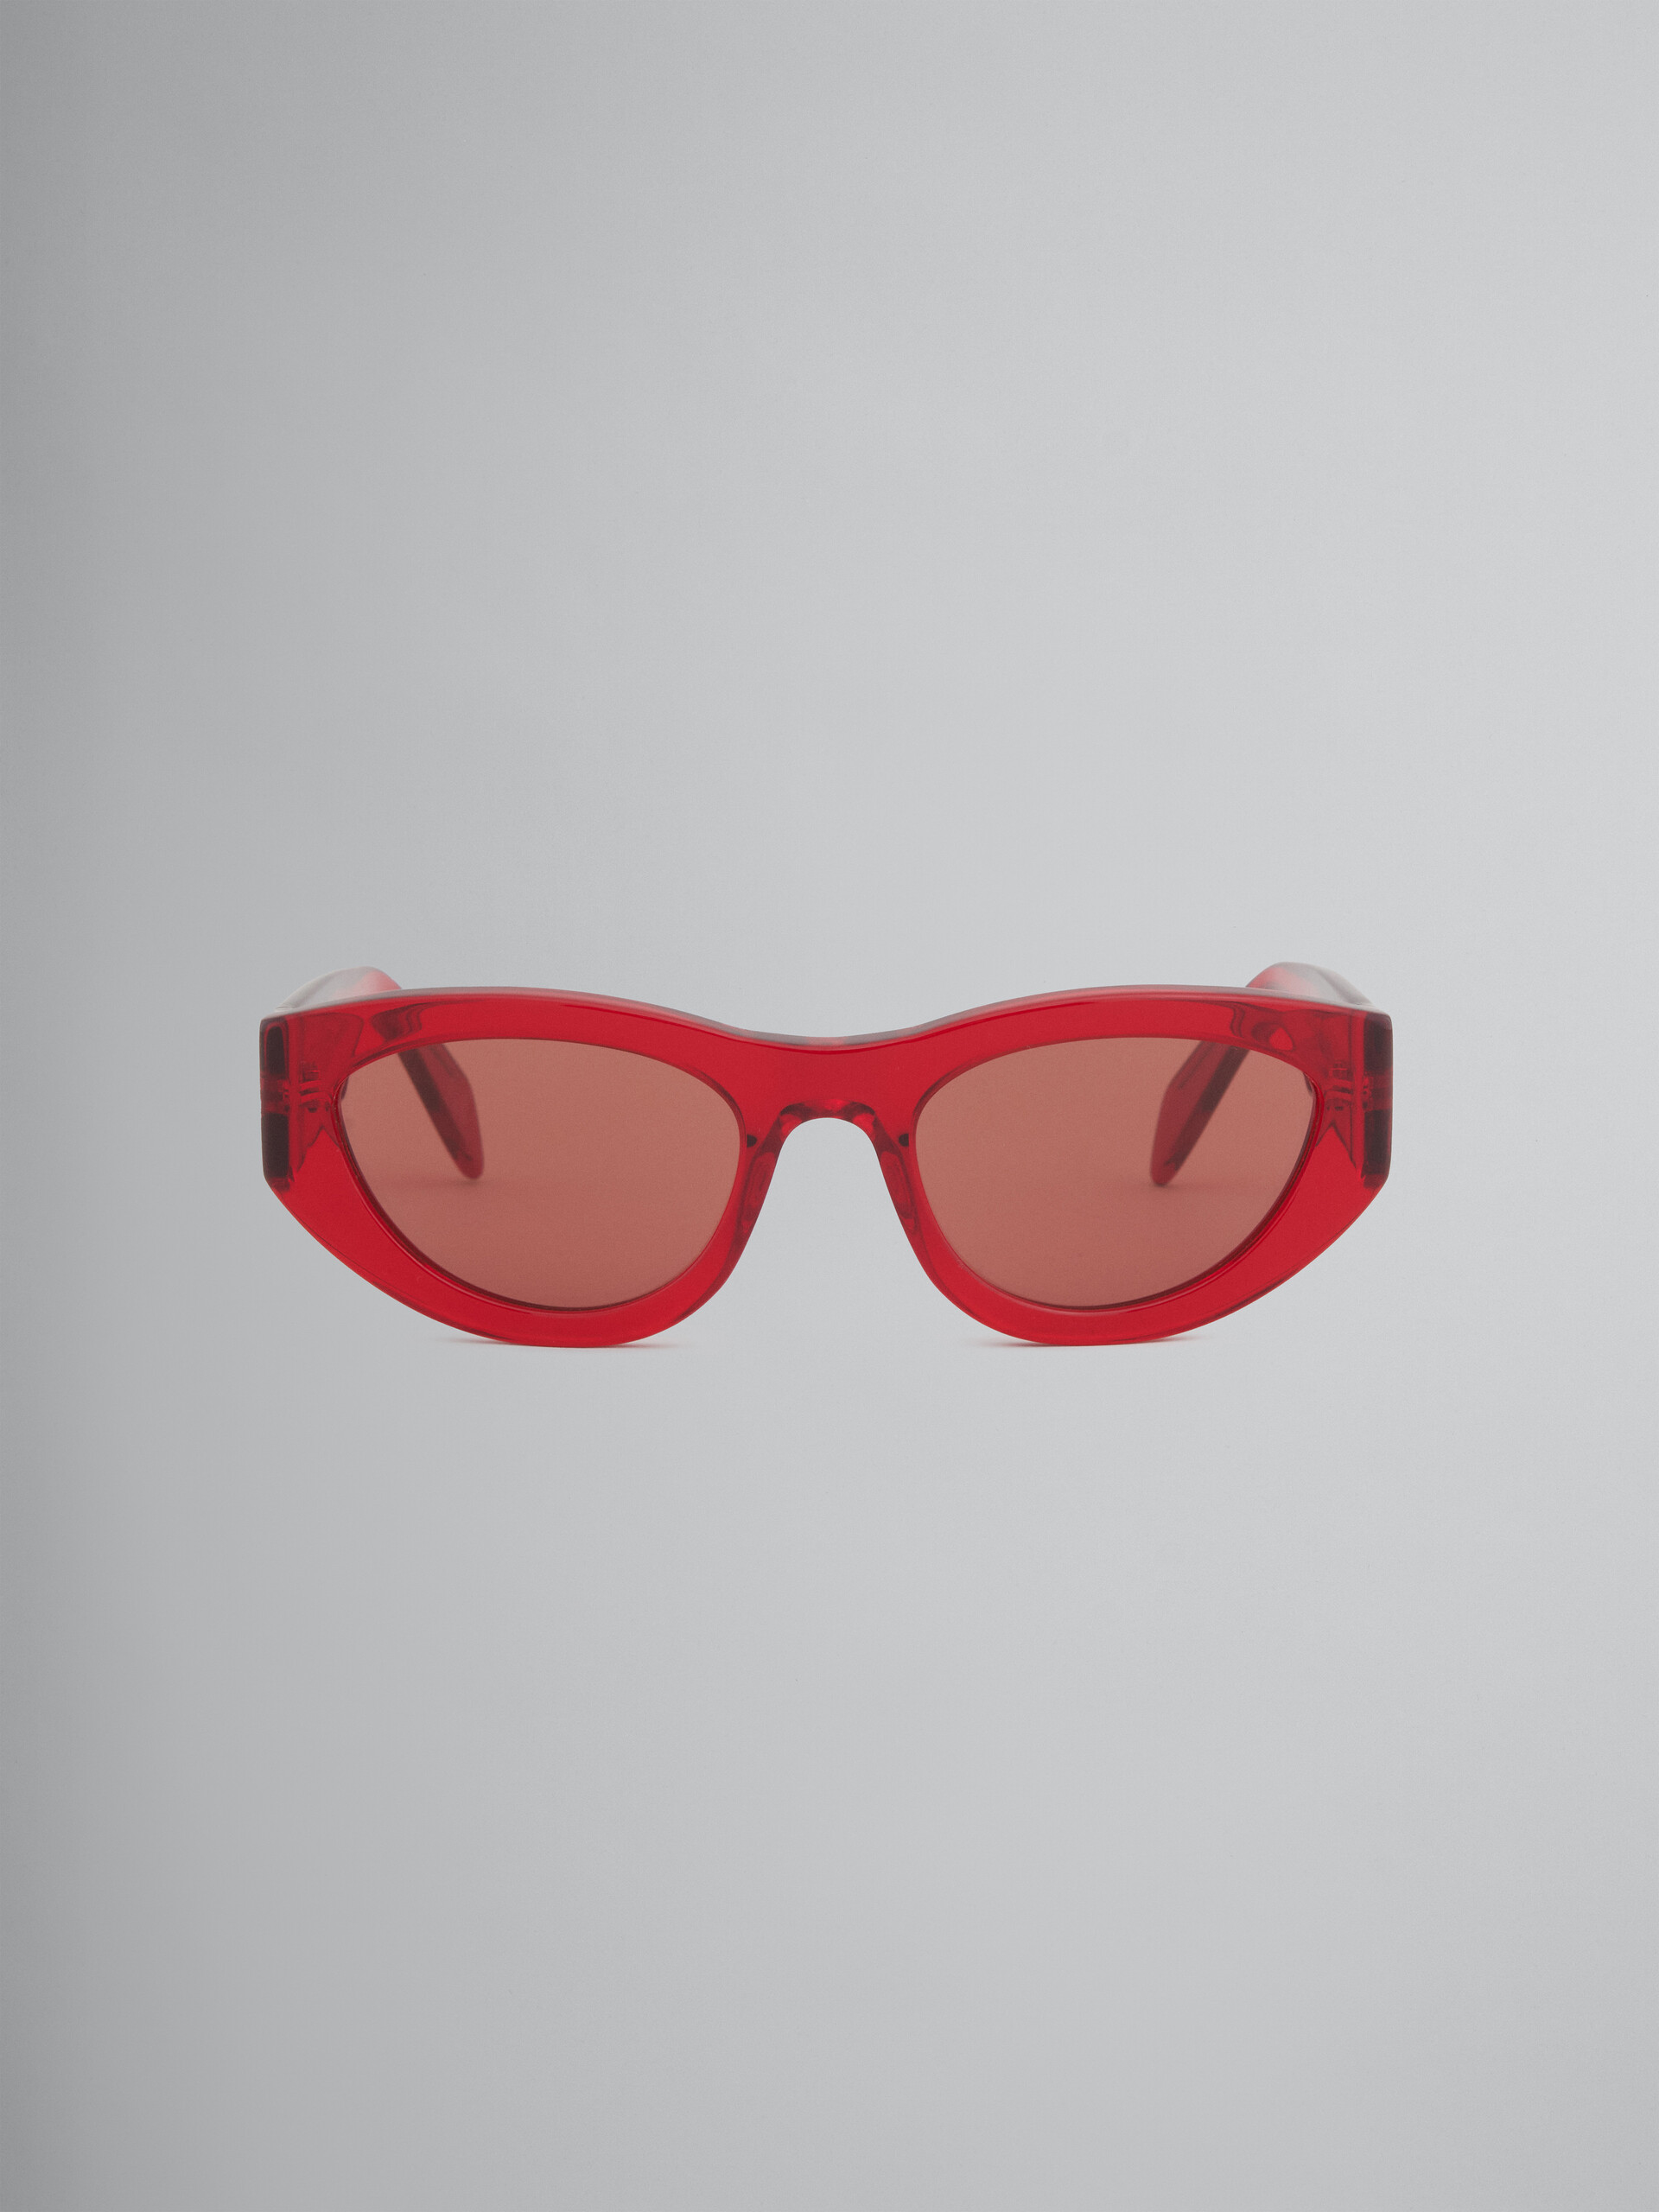 Red acetate RAINBOW MOUNTAINS sunglasses - Optical - Image 1